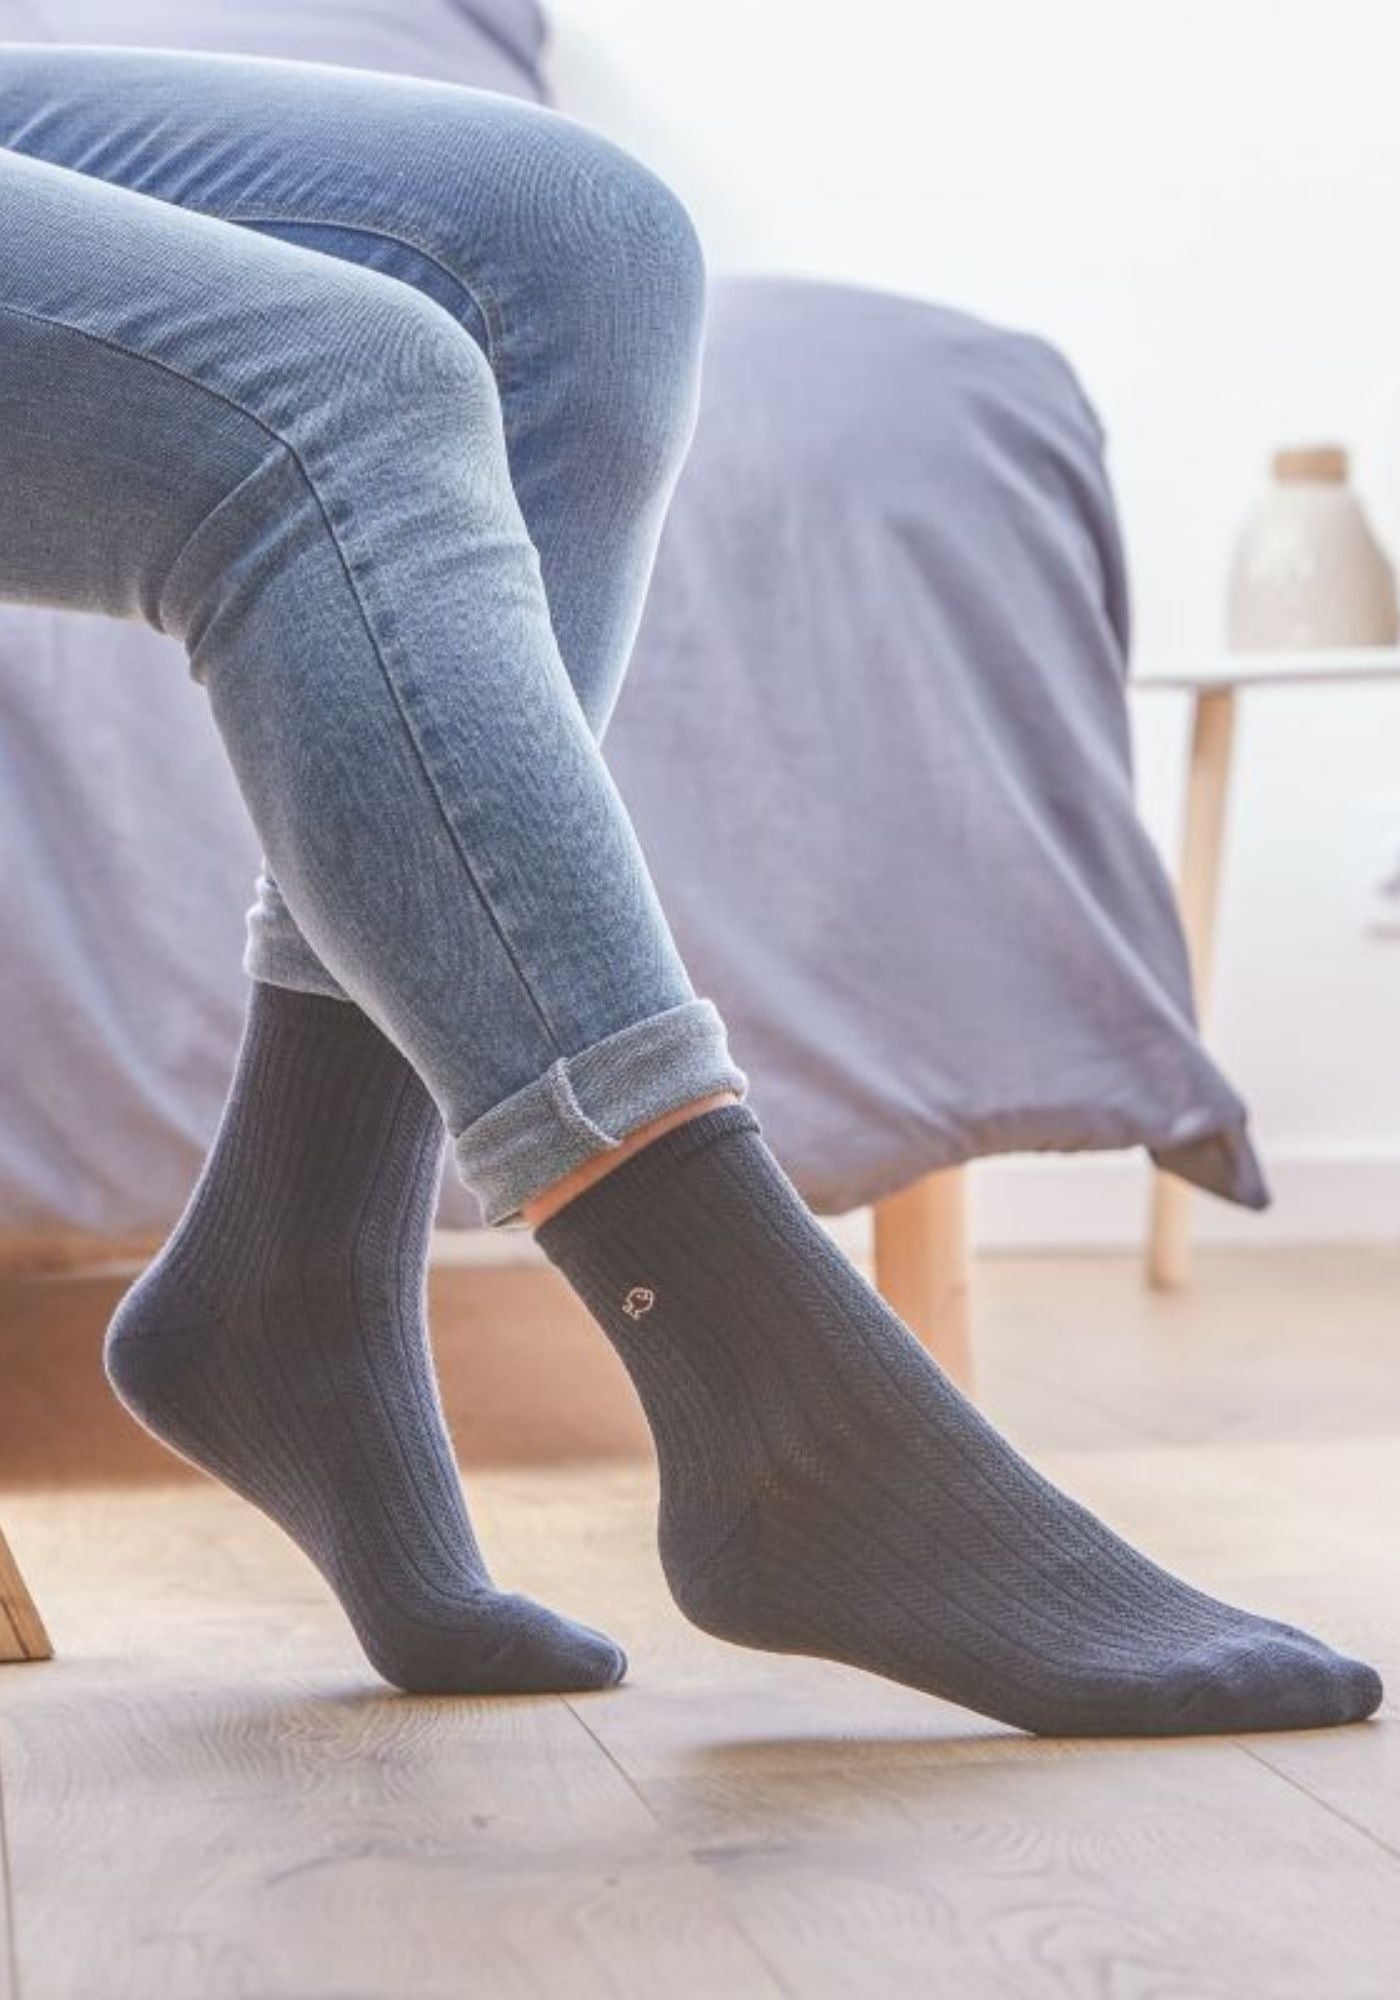 chaussettes-dentelles-femme-confort-nylon-billybelt-gris